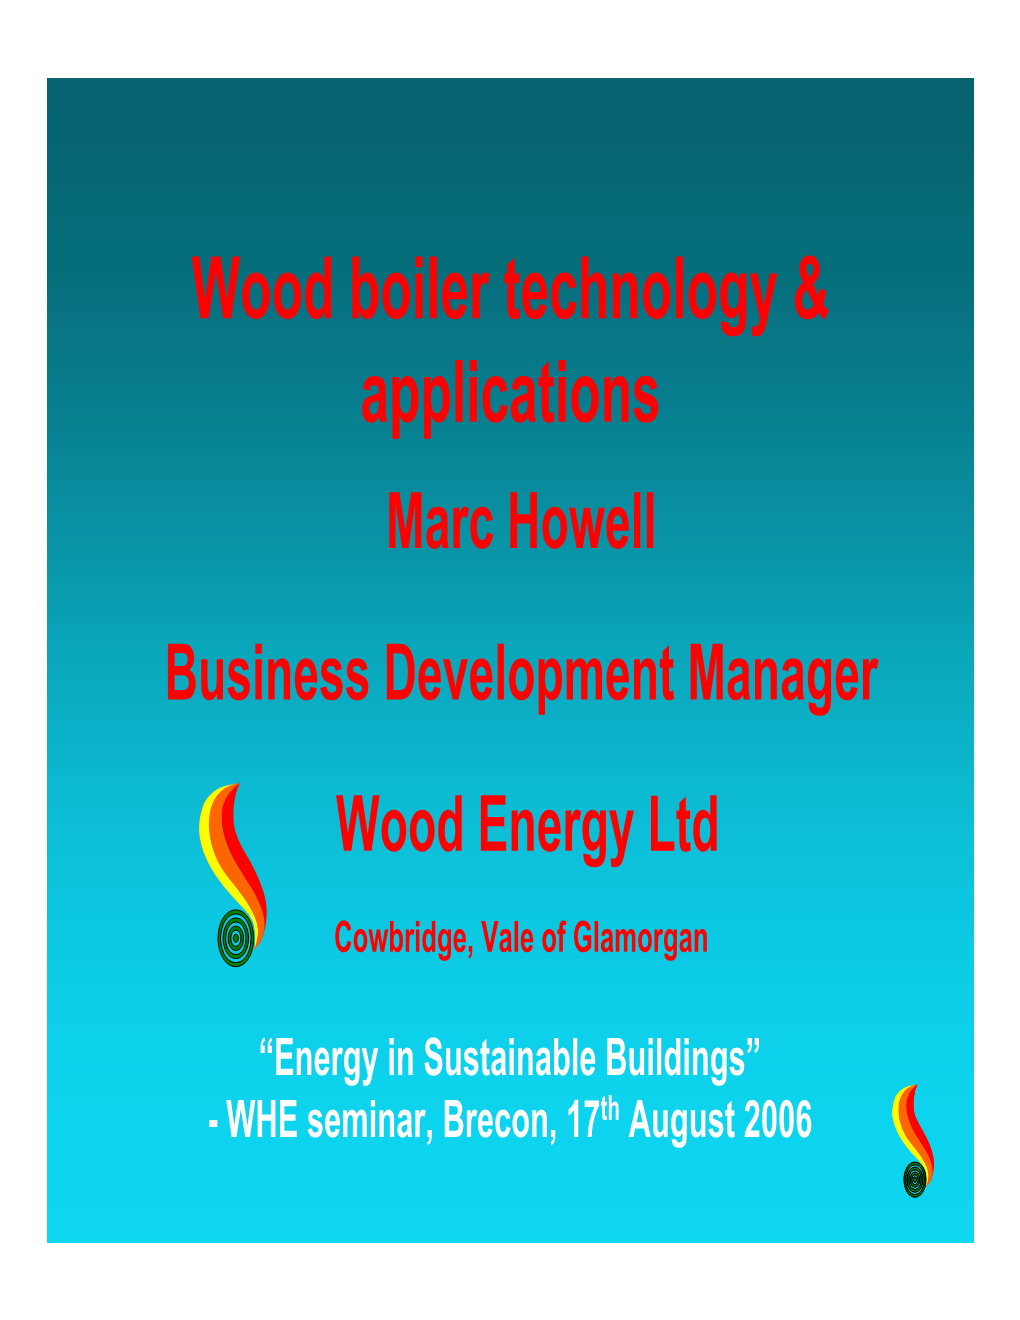 Wood Boiler Technology & Applications